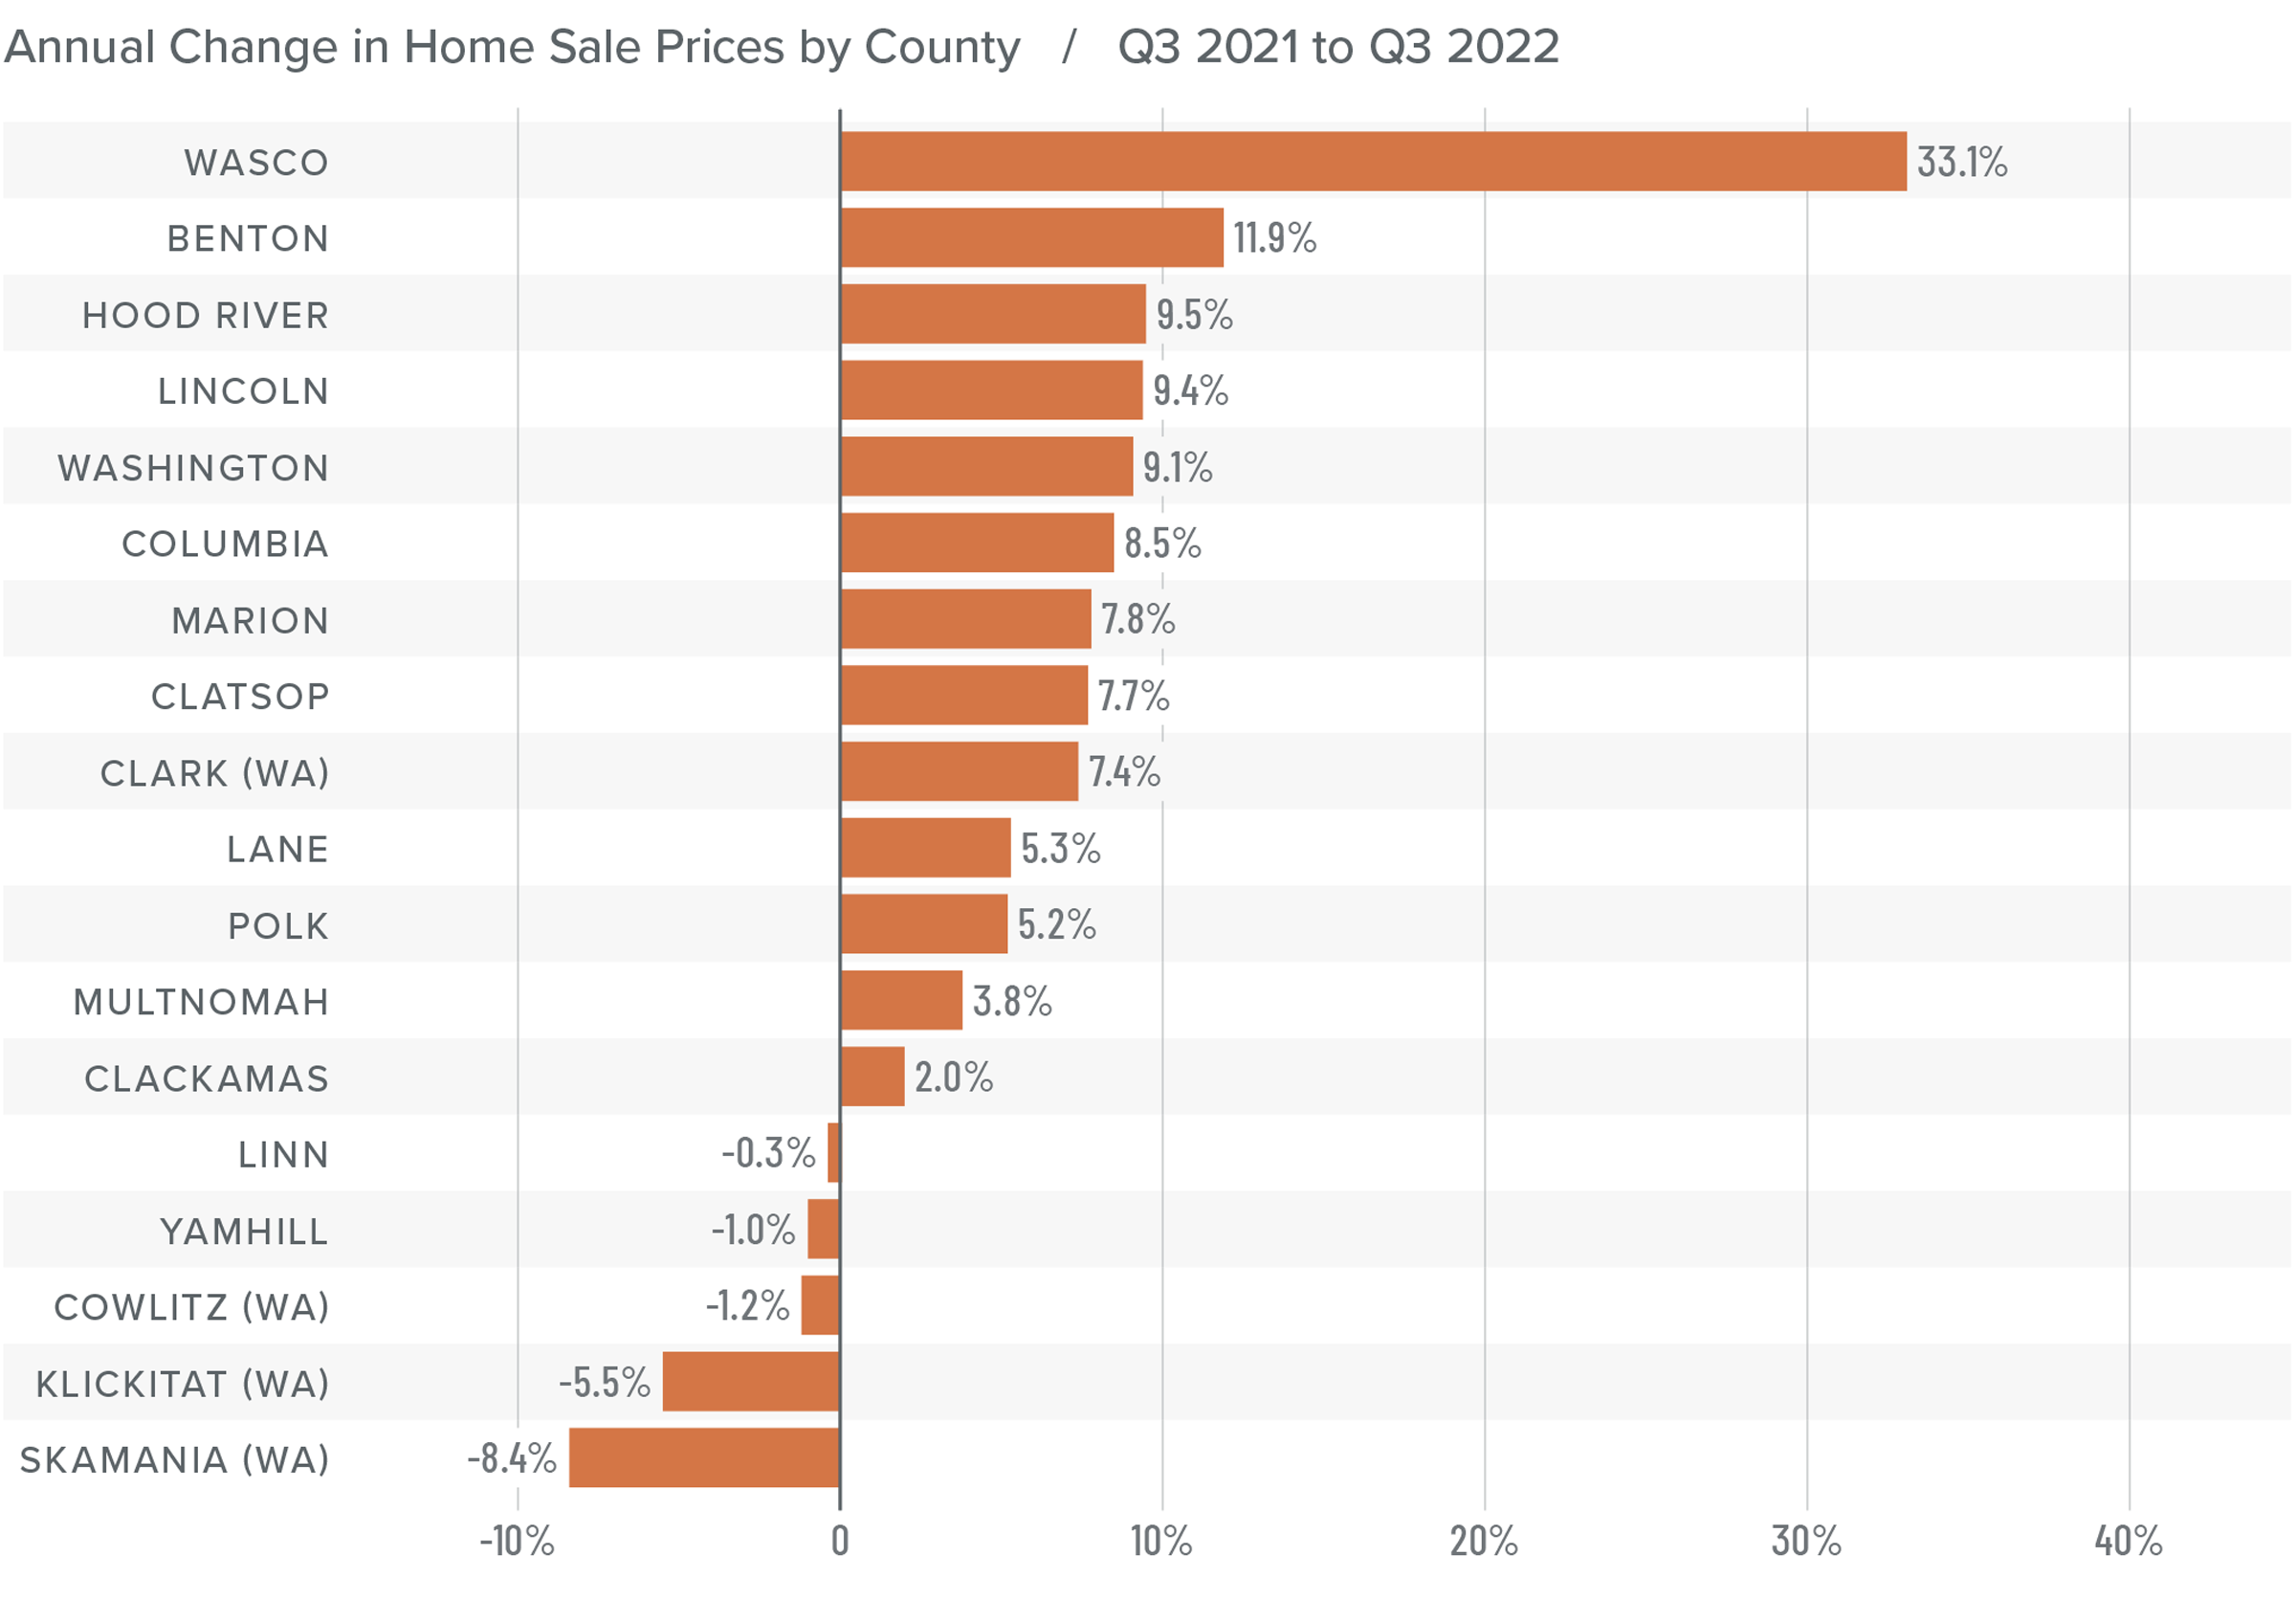 A bar graph showing the annual change in home sale prices for various counties in Northwest Oregon and Southwest Washington from Q3 2021 to Q3 2022. Wasco county tops the list at 33.1%, followed by Benton at 11.9%, Hood River at 9.5%, Lincoln at 9.4%, Washington at 9.1%, Columbia at 8.5%, Marion at 7.8%, Clatsop at 7.7%, Clark at 7.4%, Lane at 5.3%, Polk at 5.2%, Multnomah at 3.8%, Clackamas at 2%, Linn at -0.3%, Yamhill at -1%, Cowlitz at -1.2%, Klickitat at -5.5%, and Skamania at -8.4%.